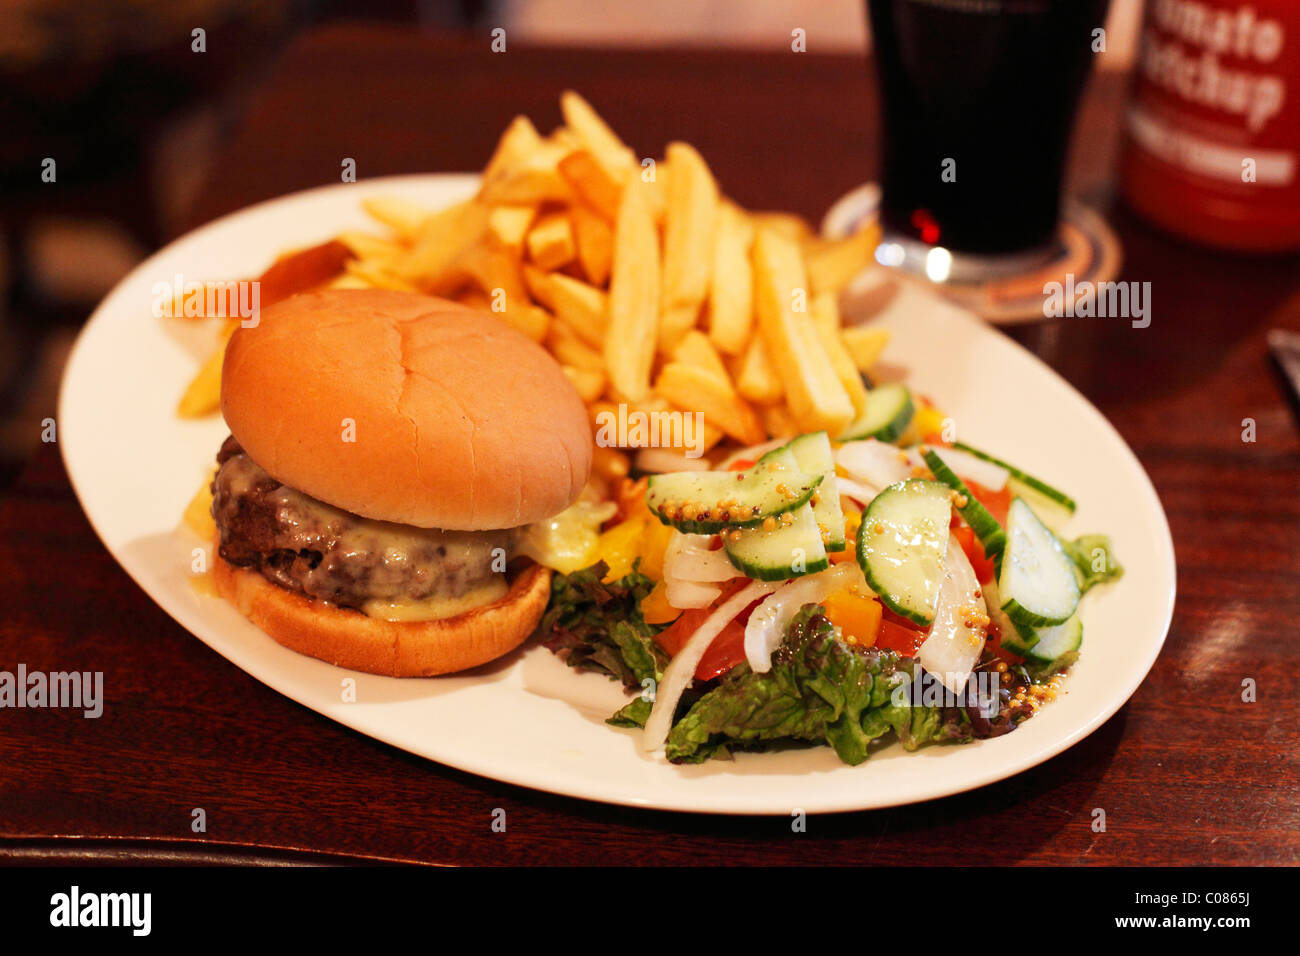 Cheeseburger with chips and salad, Ireland, British Isles, Europe Stock Photo